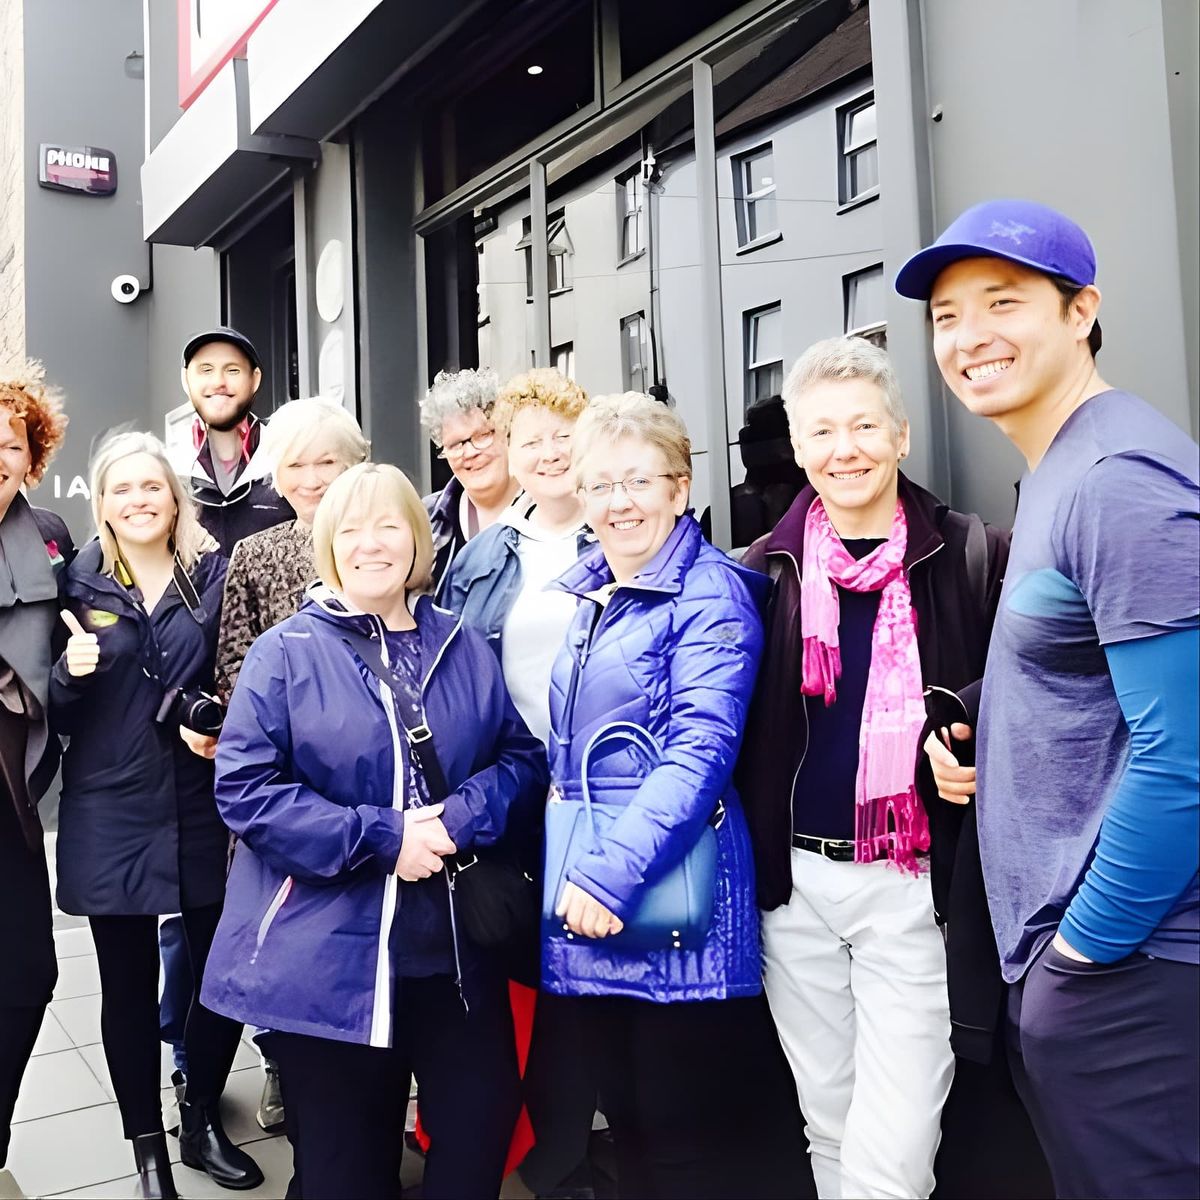 Meet and Eat Dublin: Cork Food Walking Tour